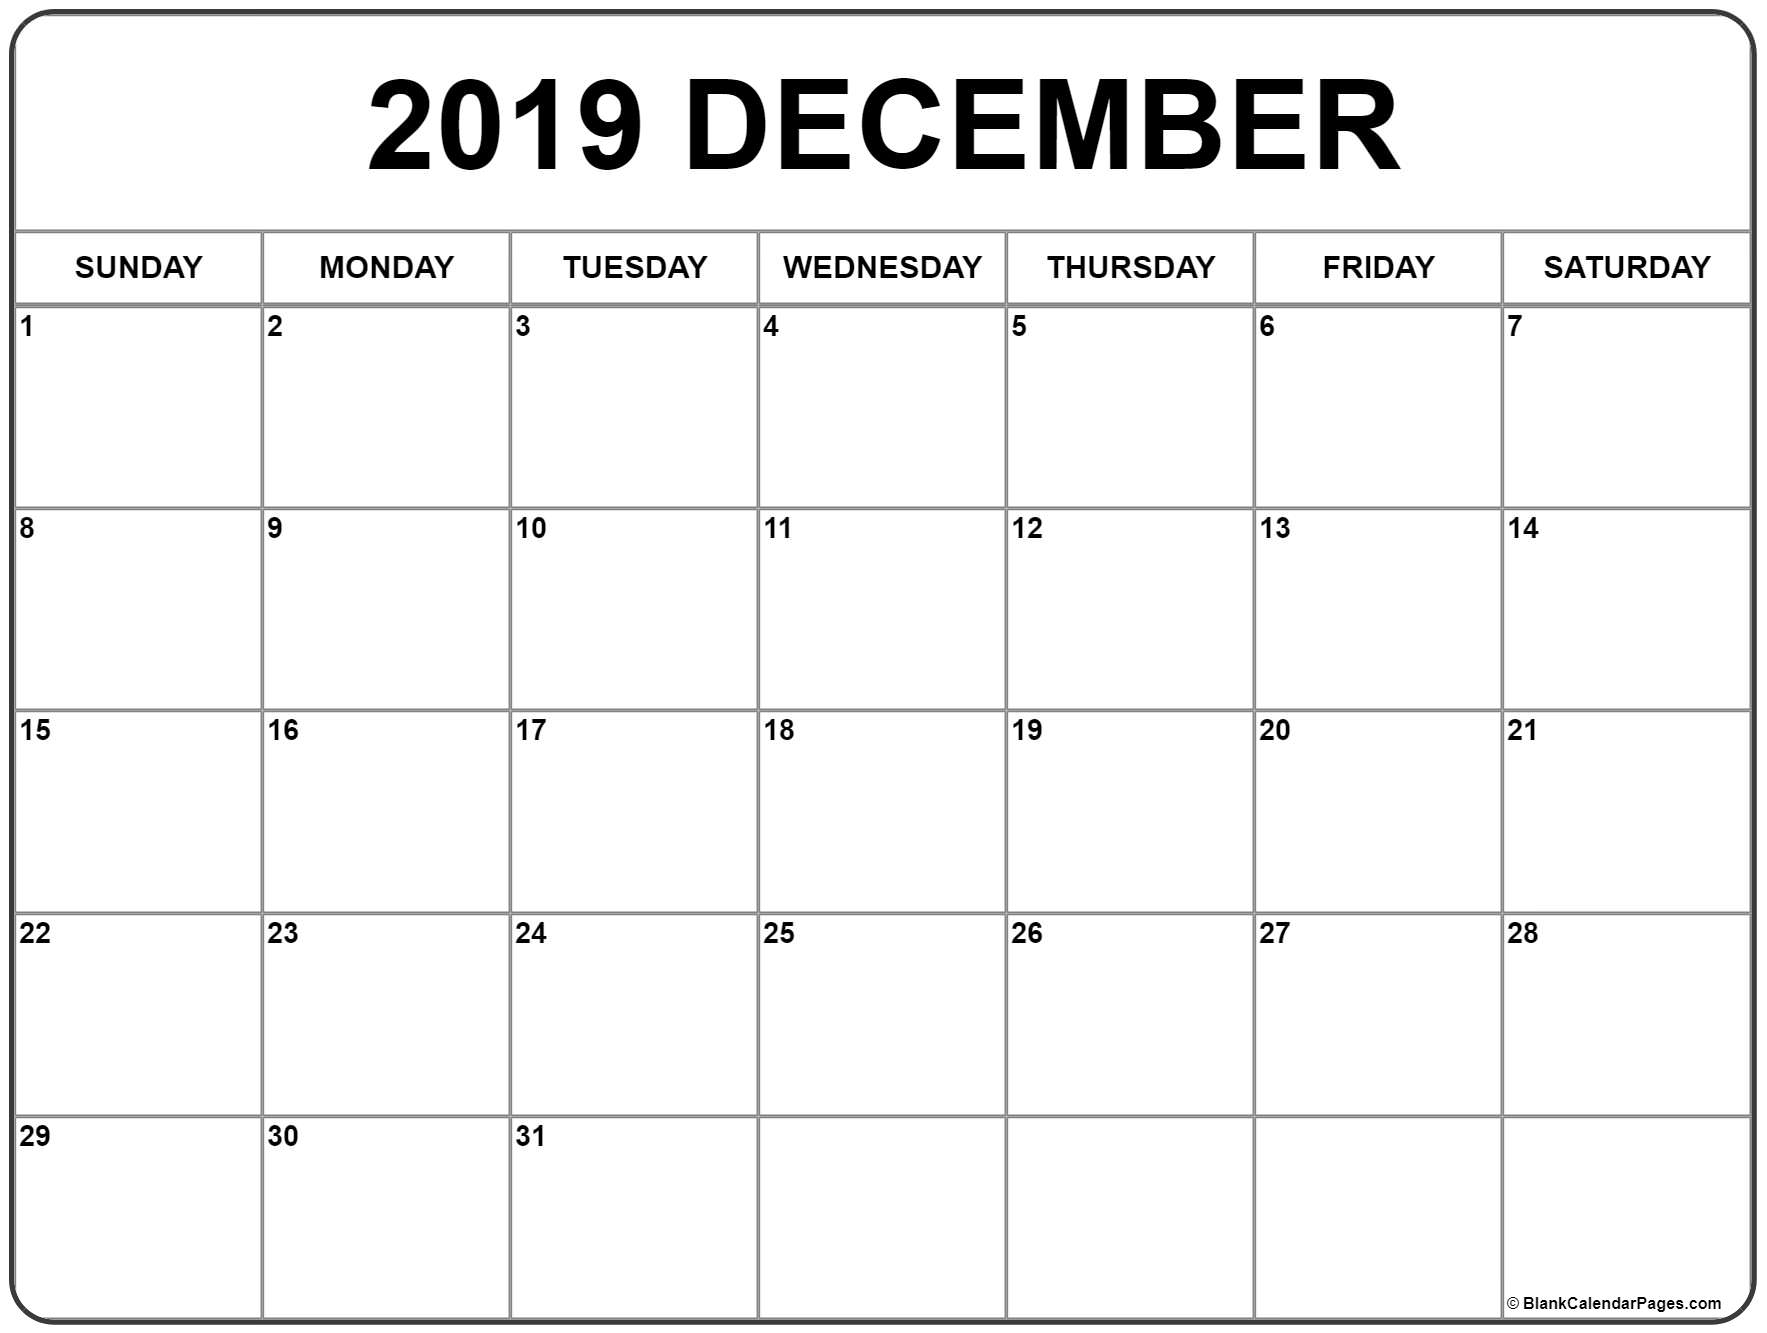 December 2019 Printable Calendar – Create Your Calendar for Free